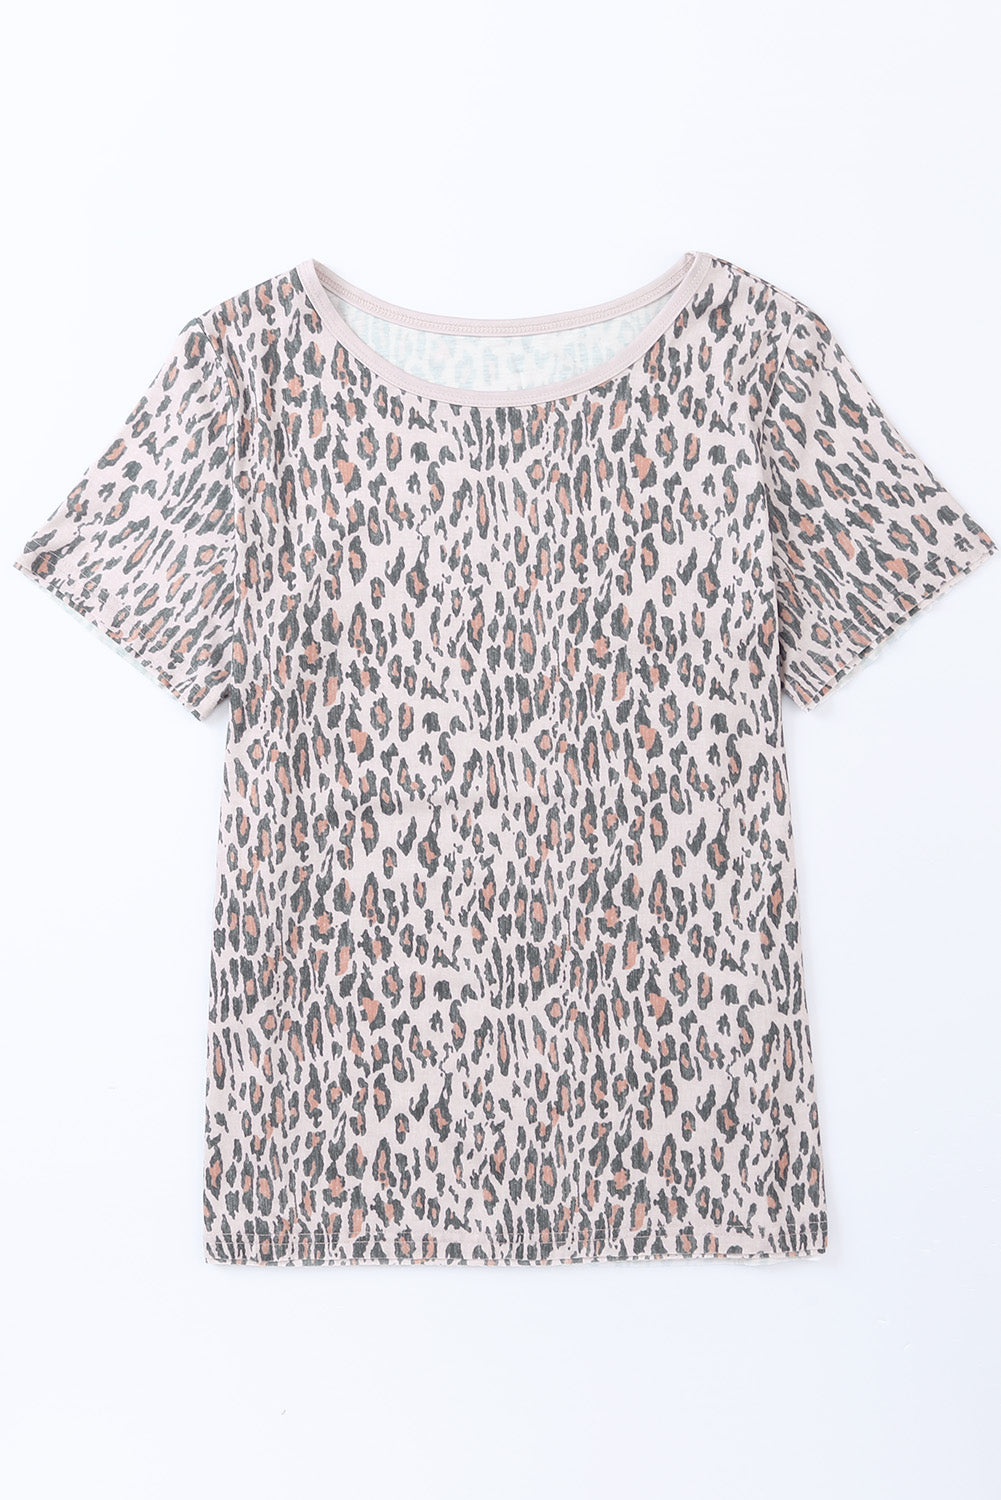 T-shirt casual con stampa animalier leopardata